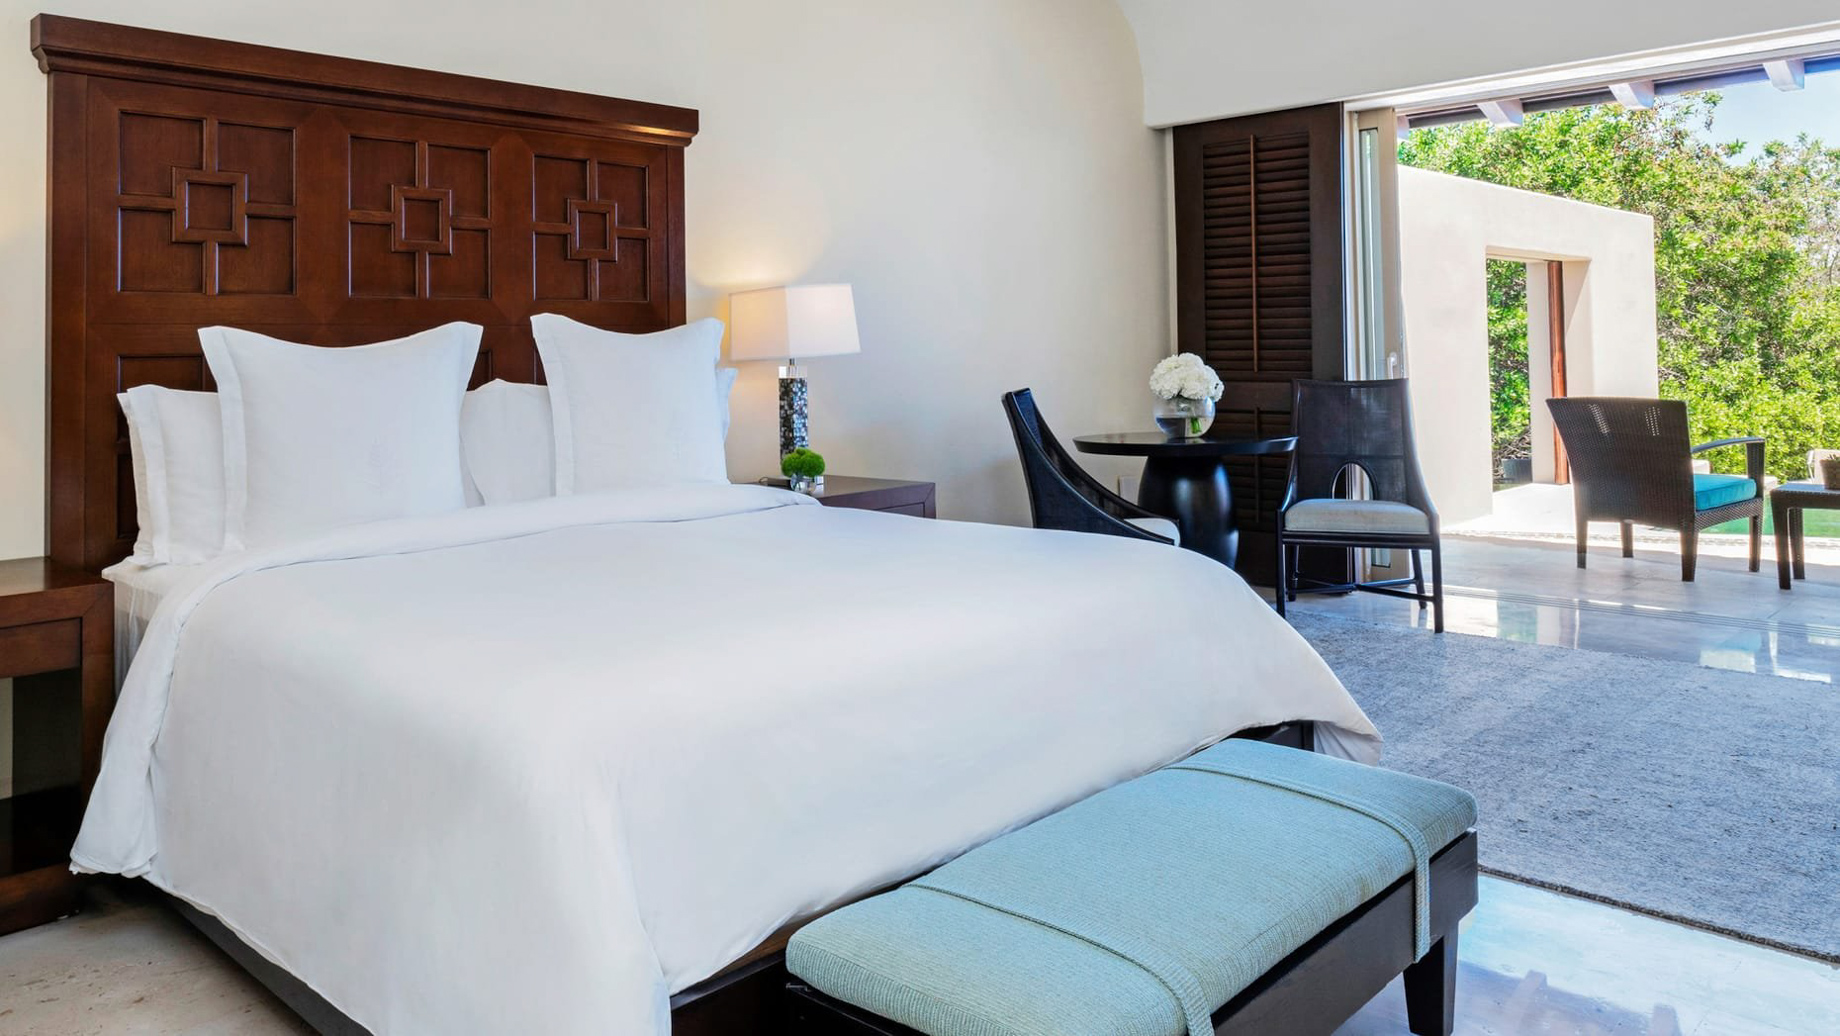 Four Seasons Resort Punta Mita – Nayarit, Mexico – Coral Beach House Bedroom Deck